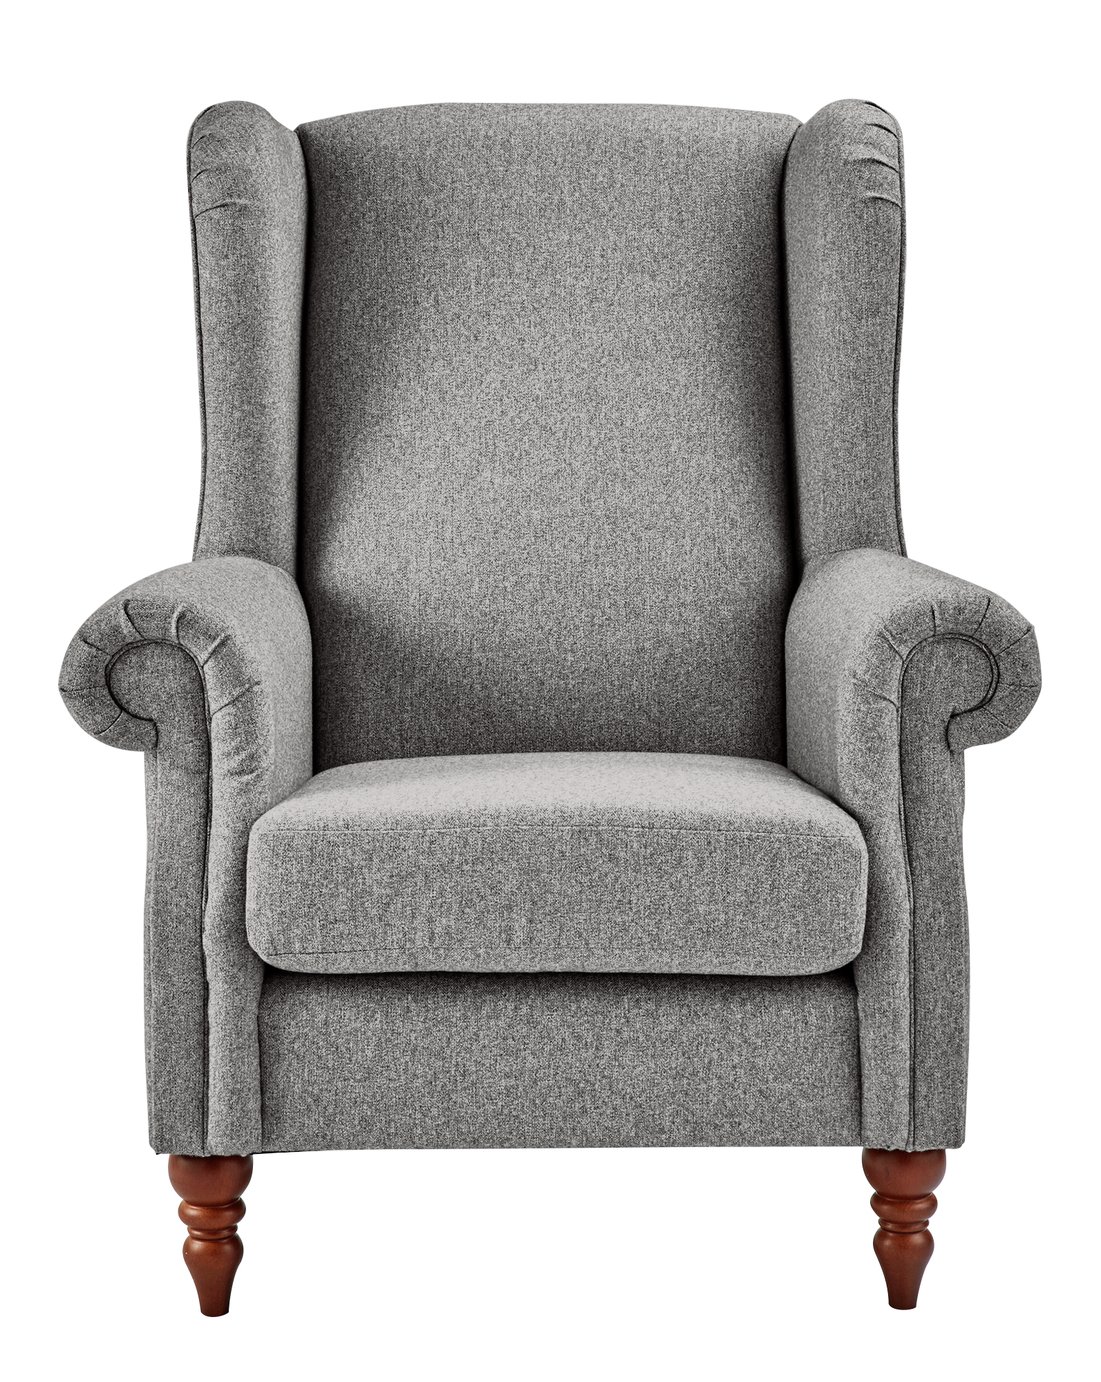 Argos Home Argyll Fabric High Back Chair - Grey